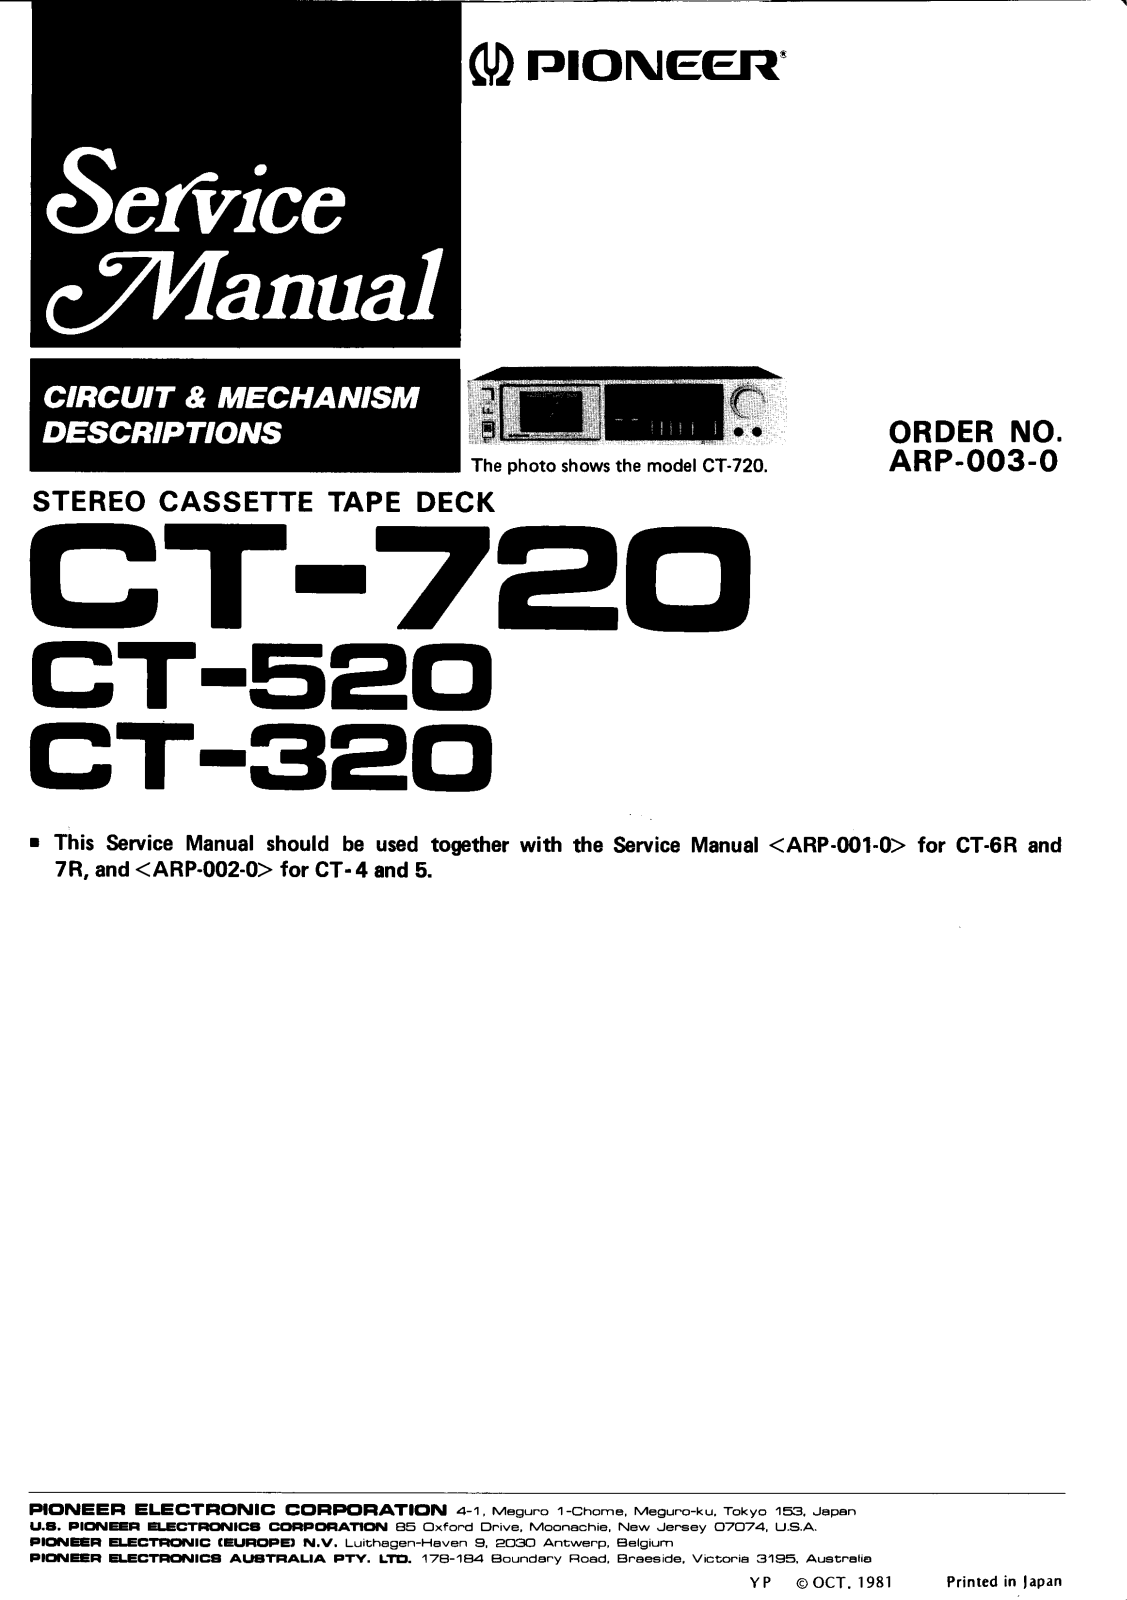 Pioneer CT-320, CT-720 Service manual